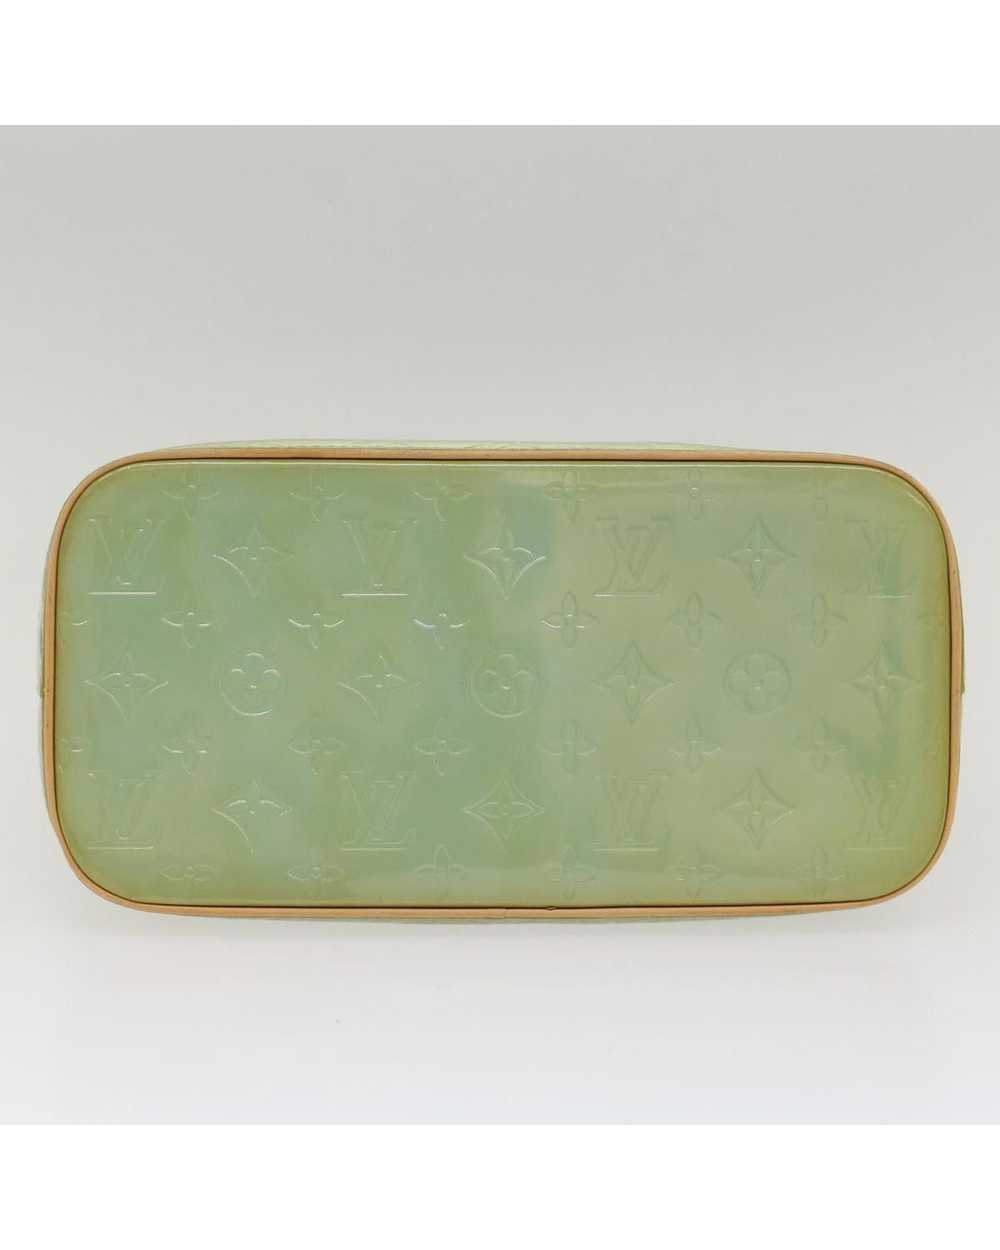 Louis Vuitton Green Patent Leather Handbag - image 9